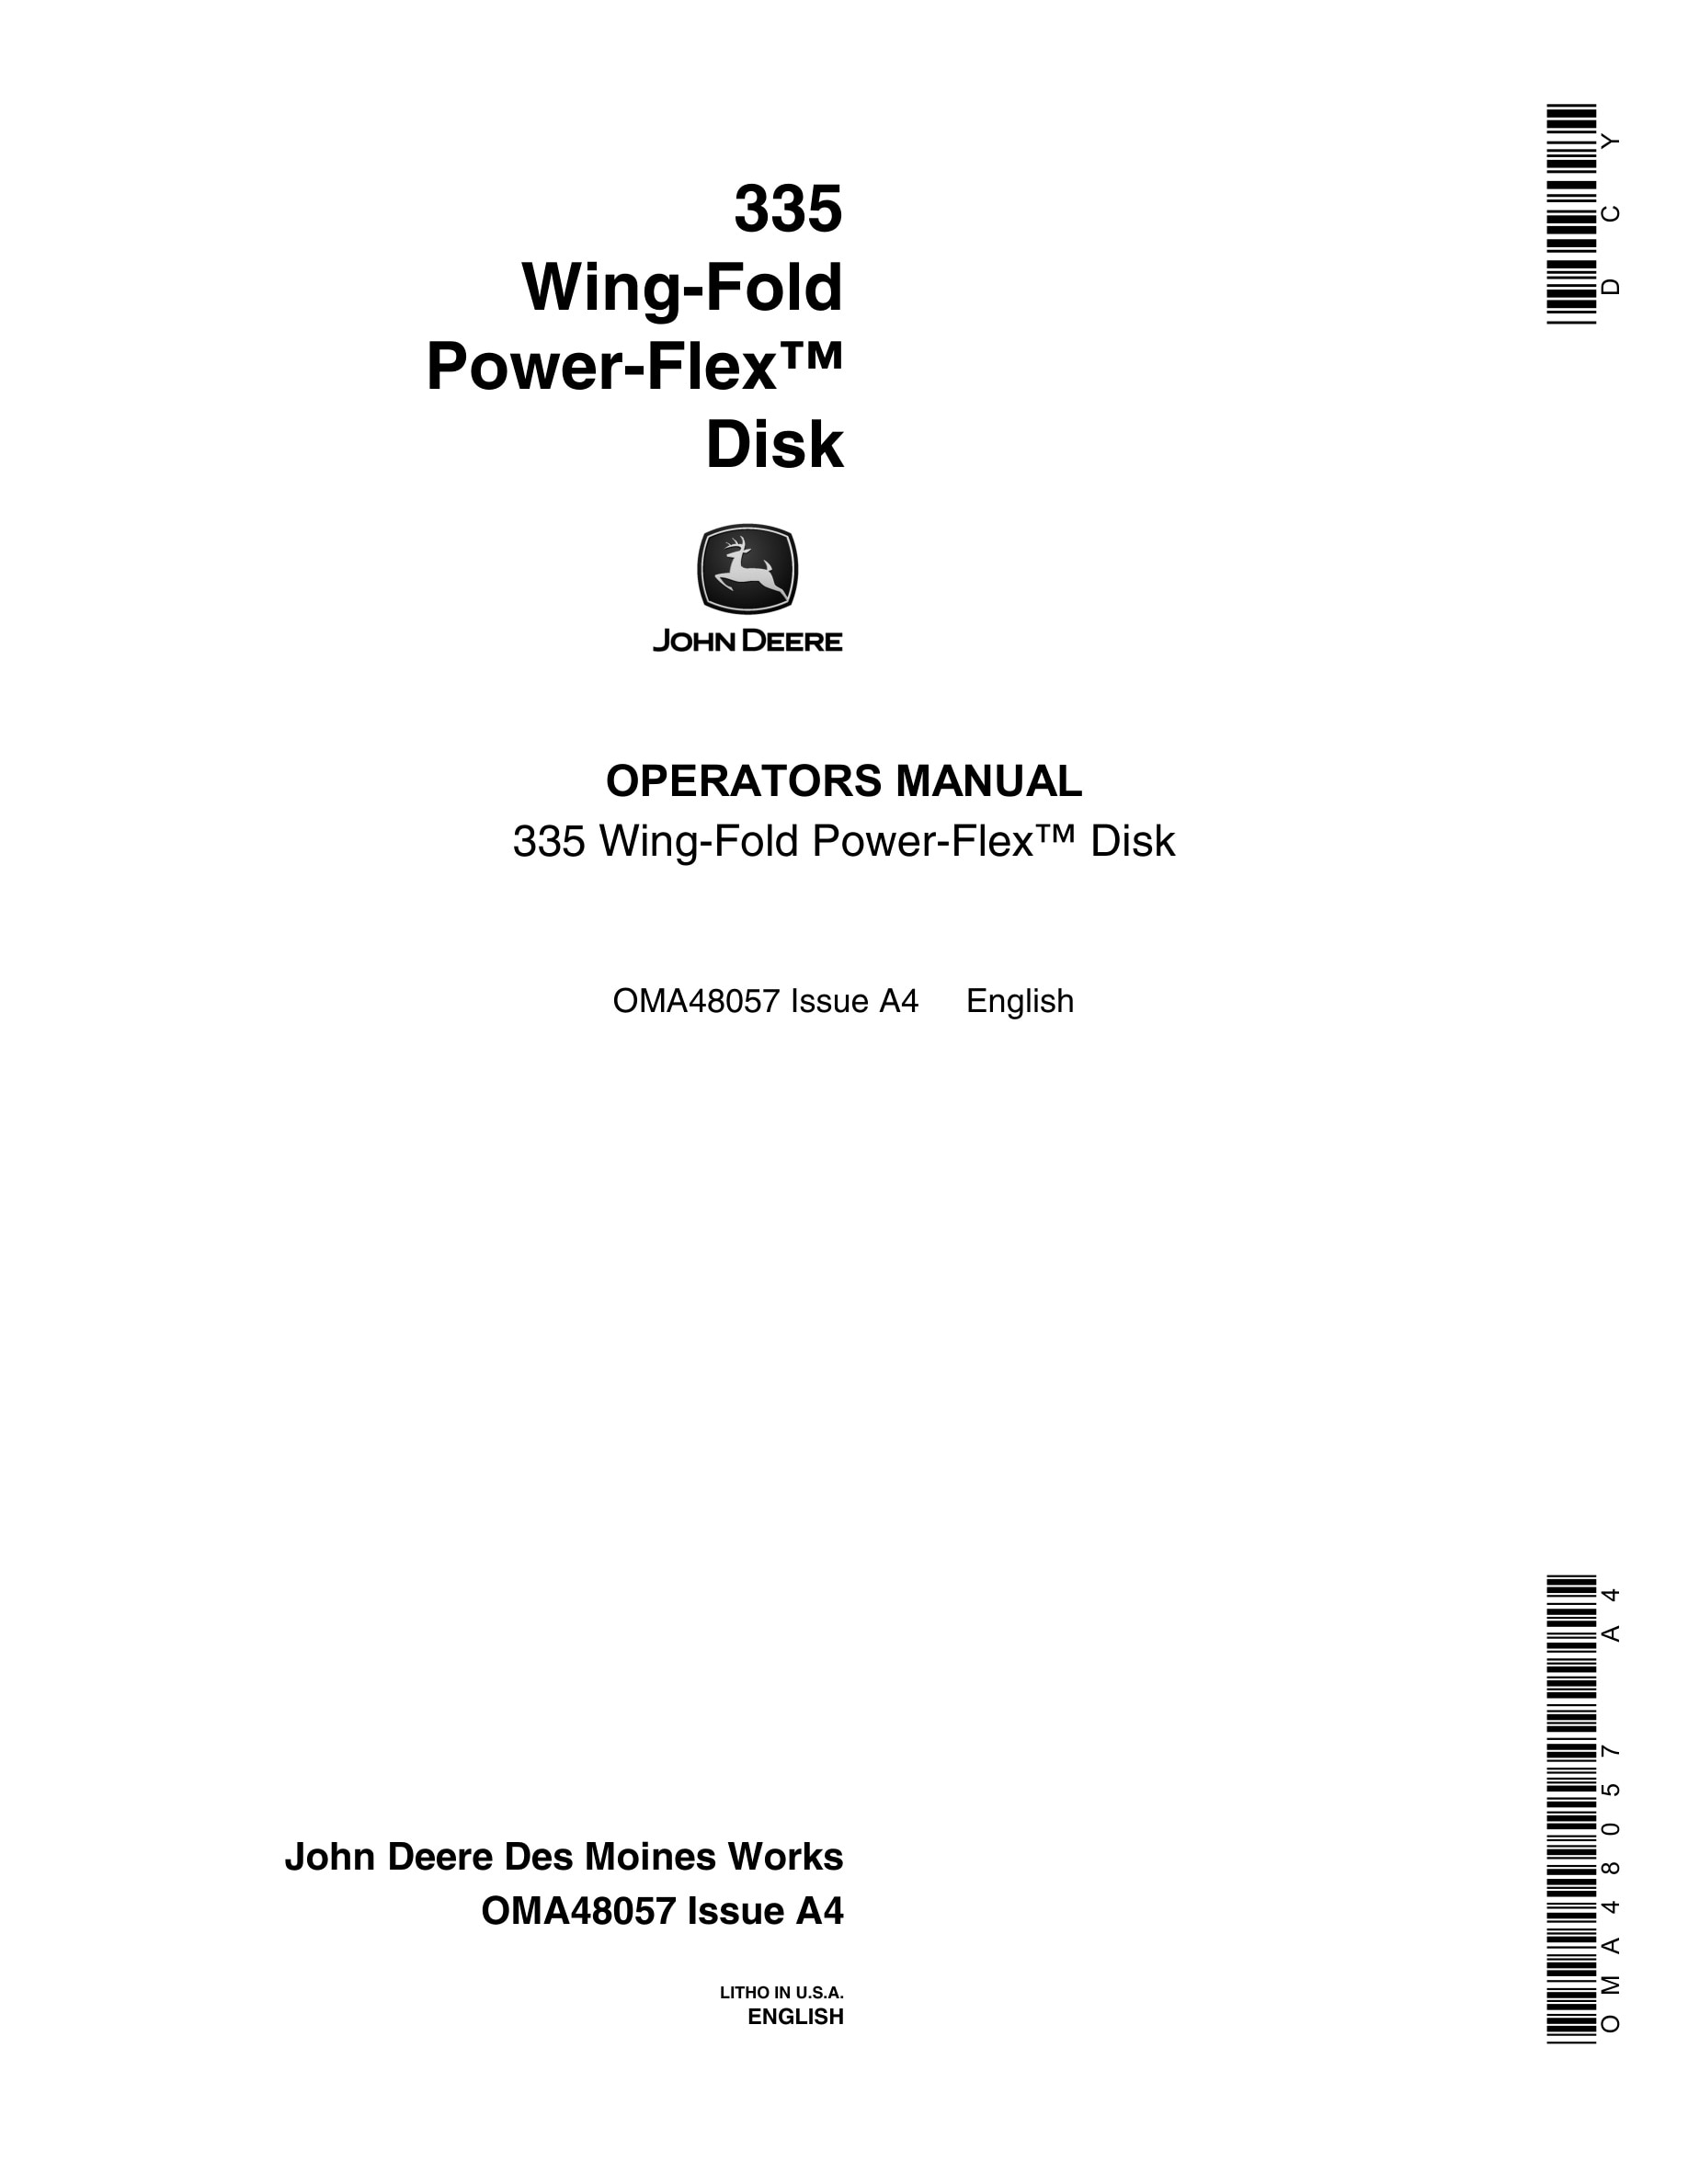 John Deere 335 Wing-Fold Power-Flex Disk Operator Manual OMA48057-1